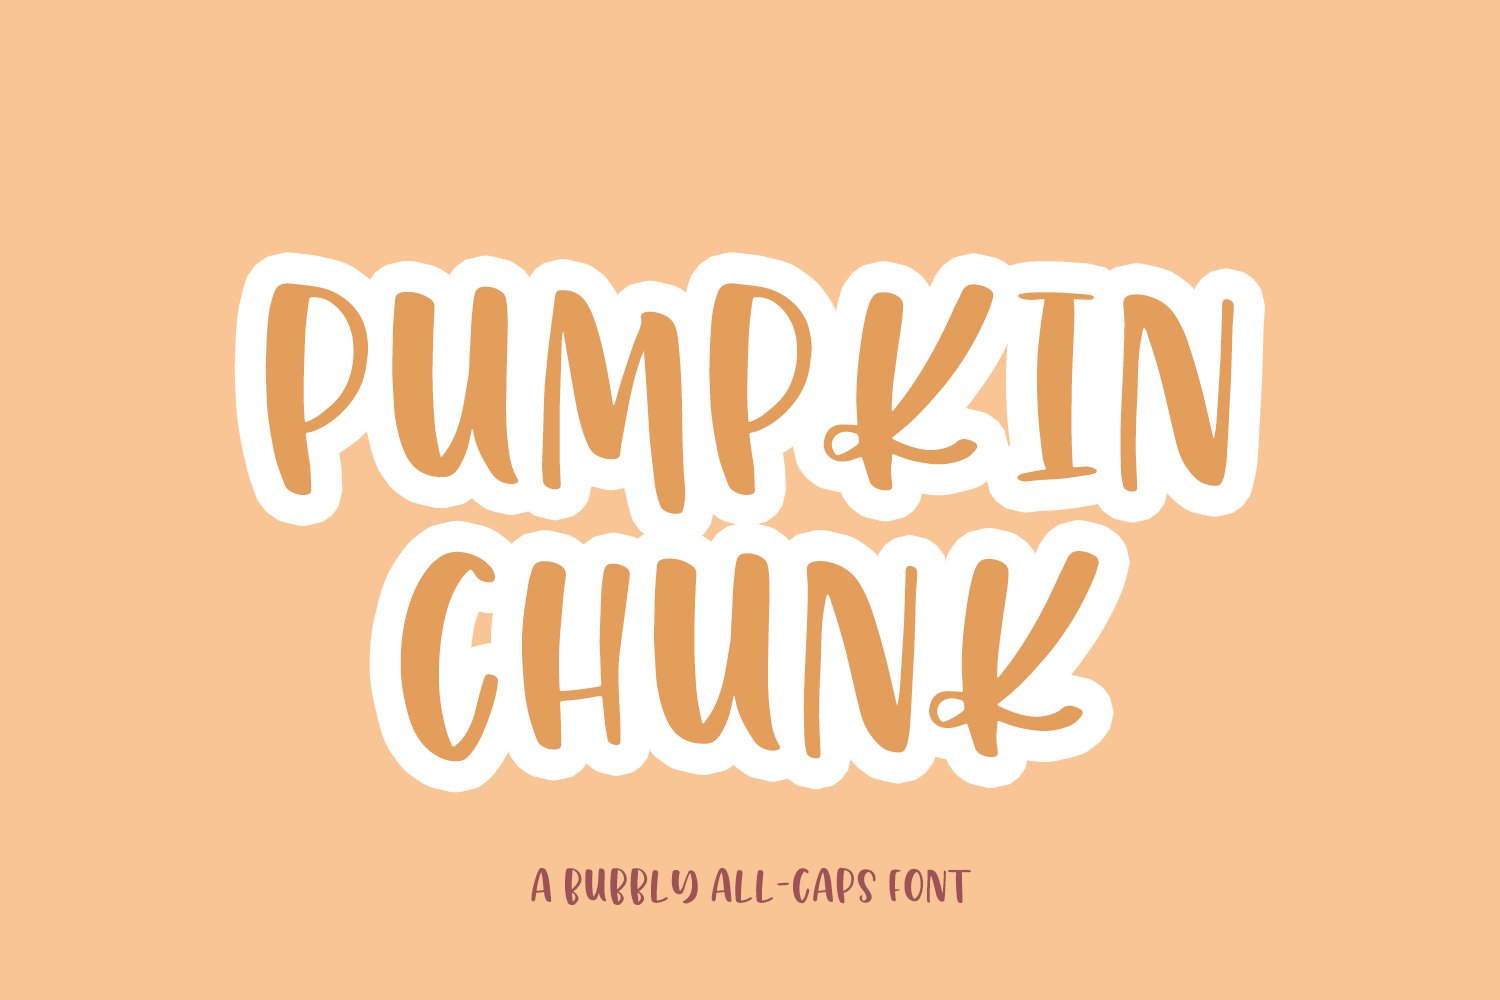 Pumpkin Chunk Sans cover image.